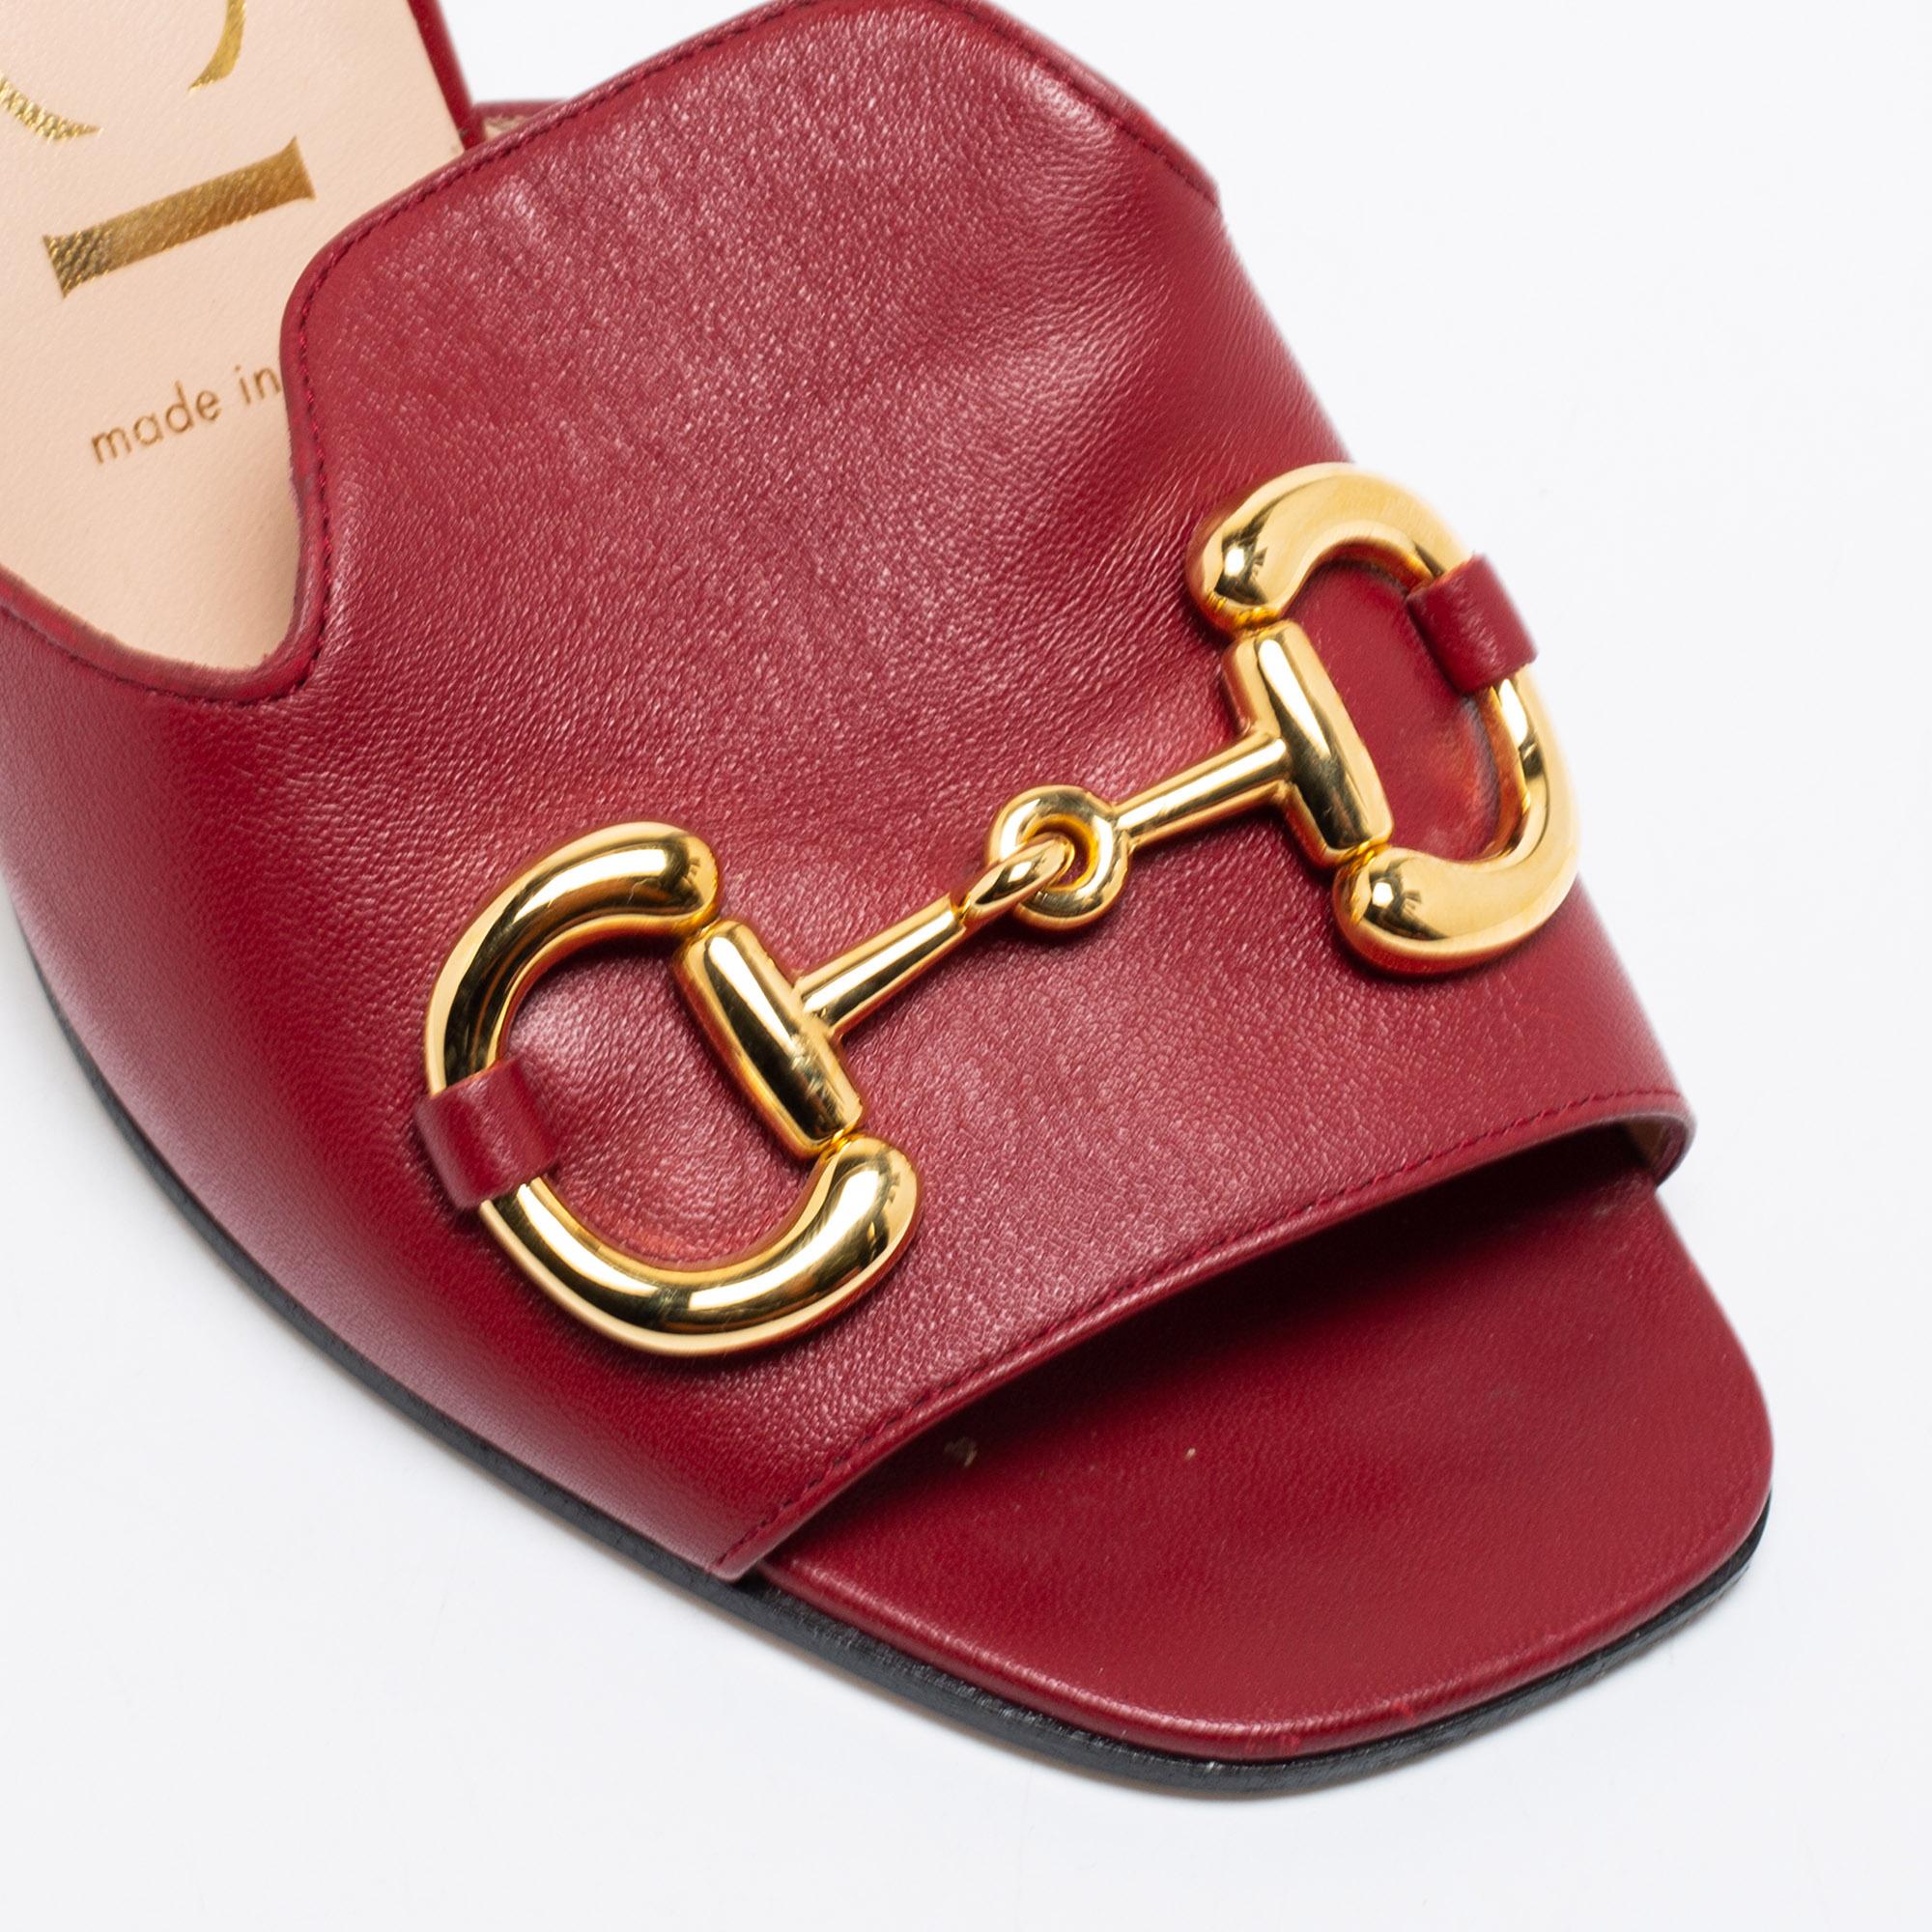 Gucci Burgundy Leather Horsebit Slide Sandals Size 38 4